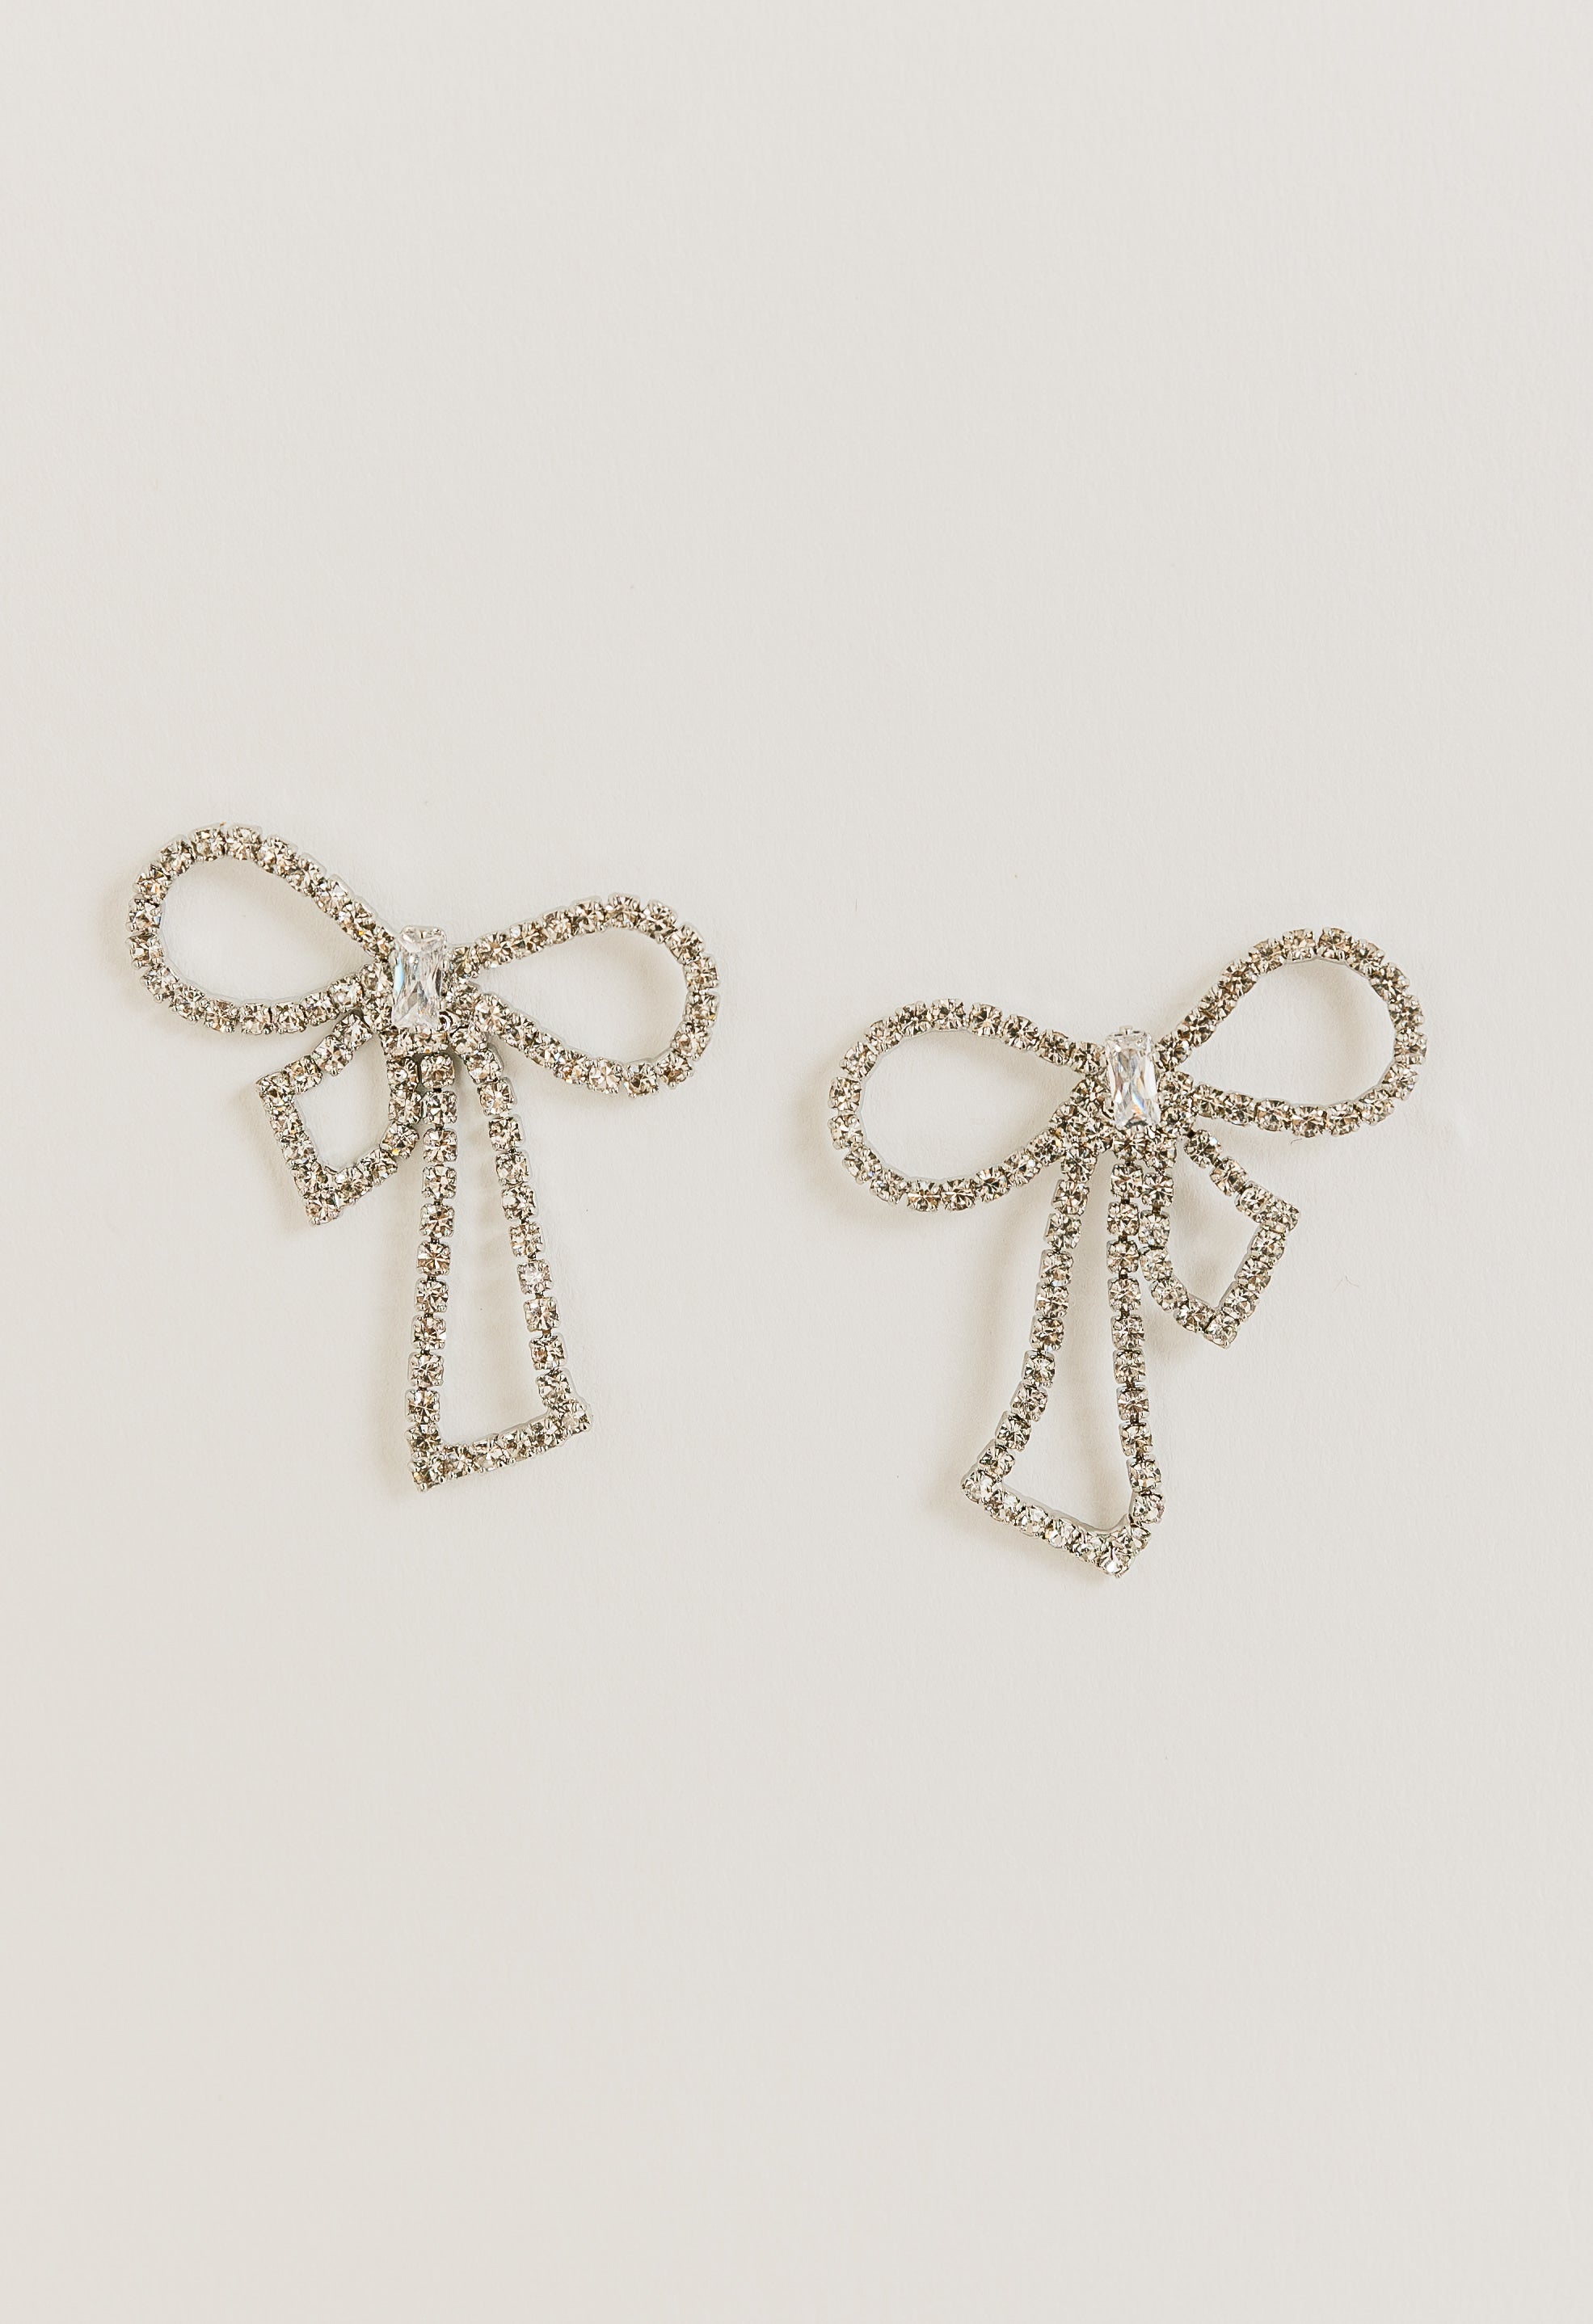 Josephine Earrings - SILVER - willows clothing Earrings